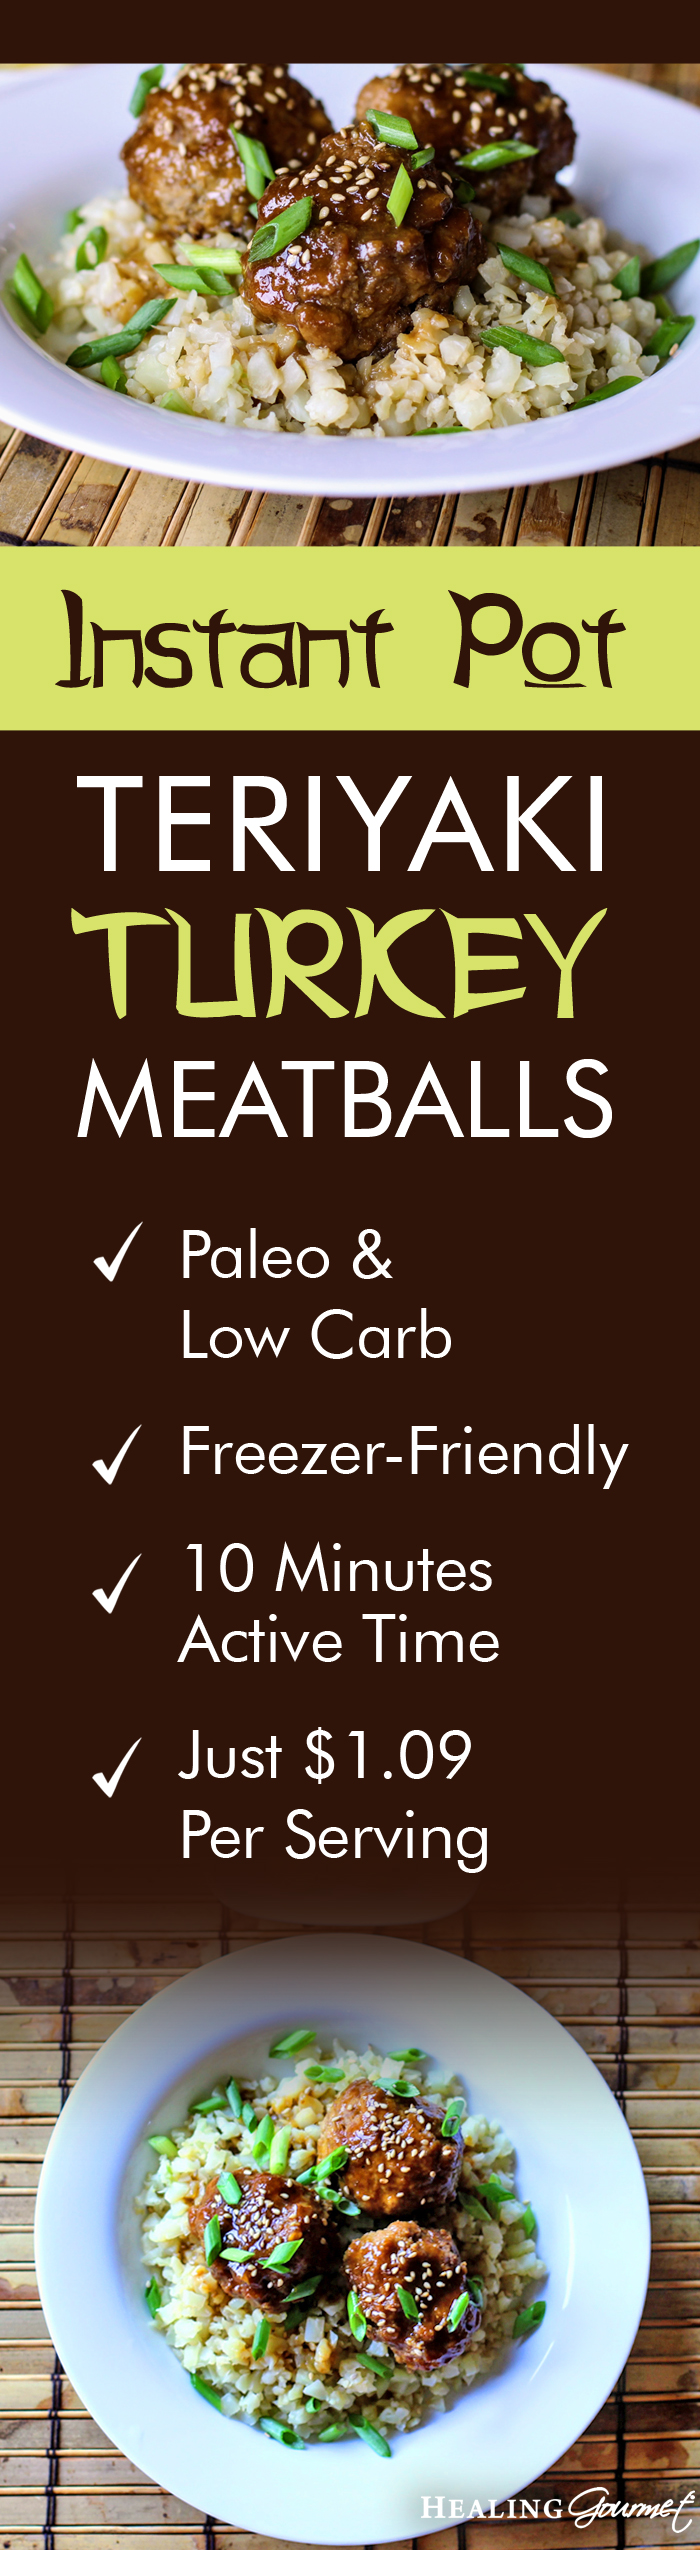 Instant Pot Teriyaki Turkey Meatballs